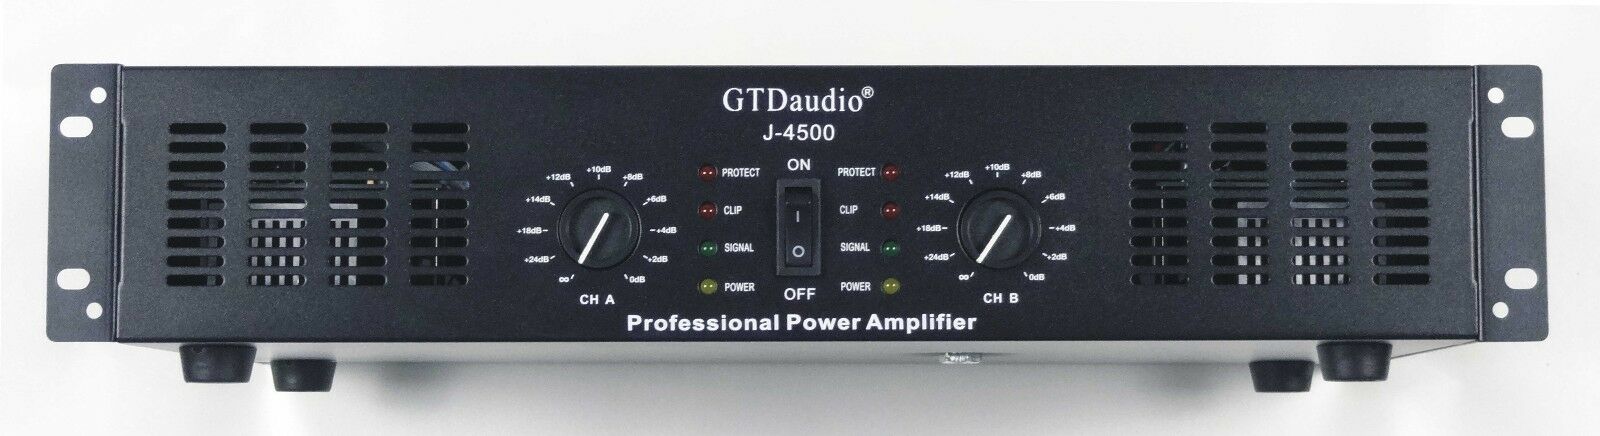 Gtd Audio 2 Channel 4500 Watts Professional Power Amplifier Amp Stereo J4500